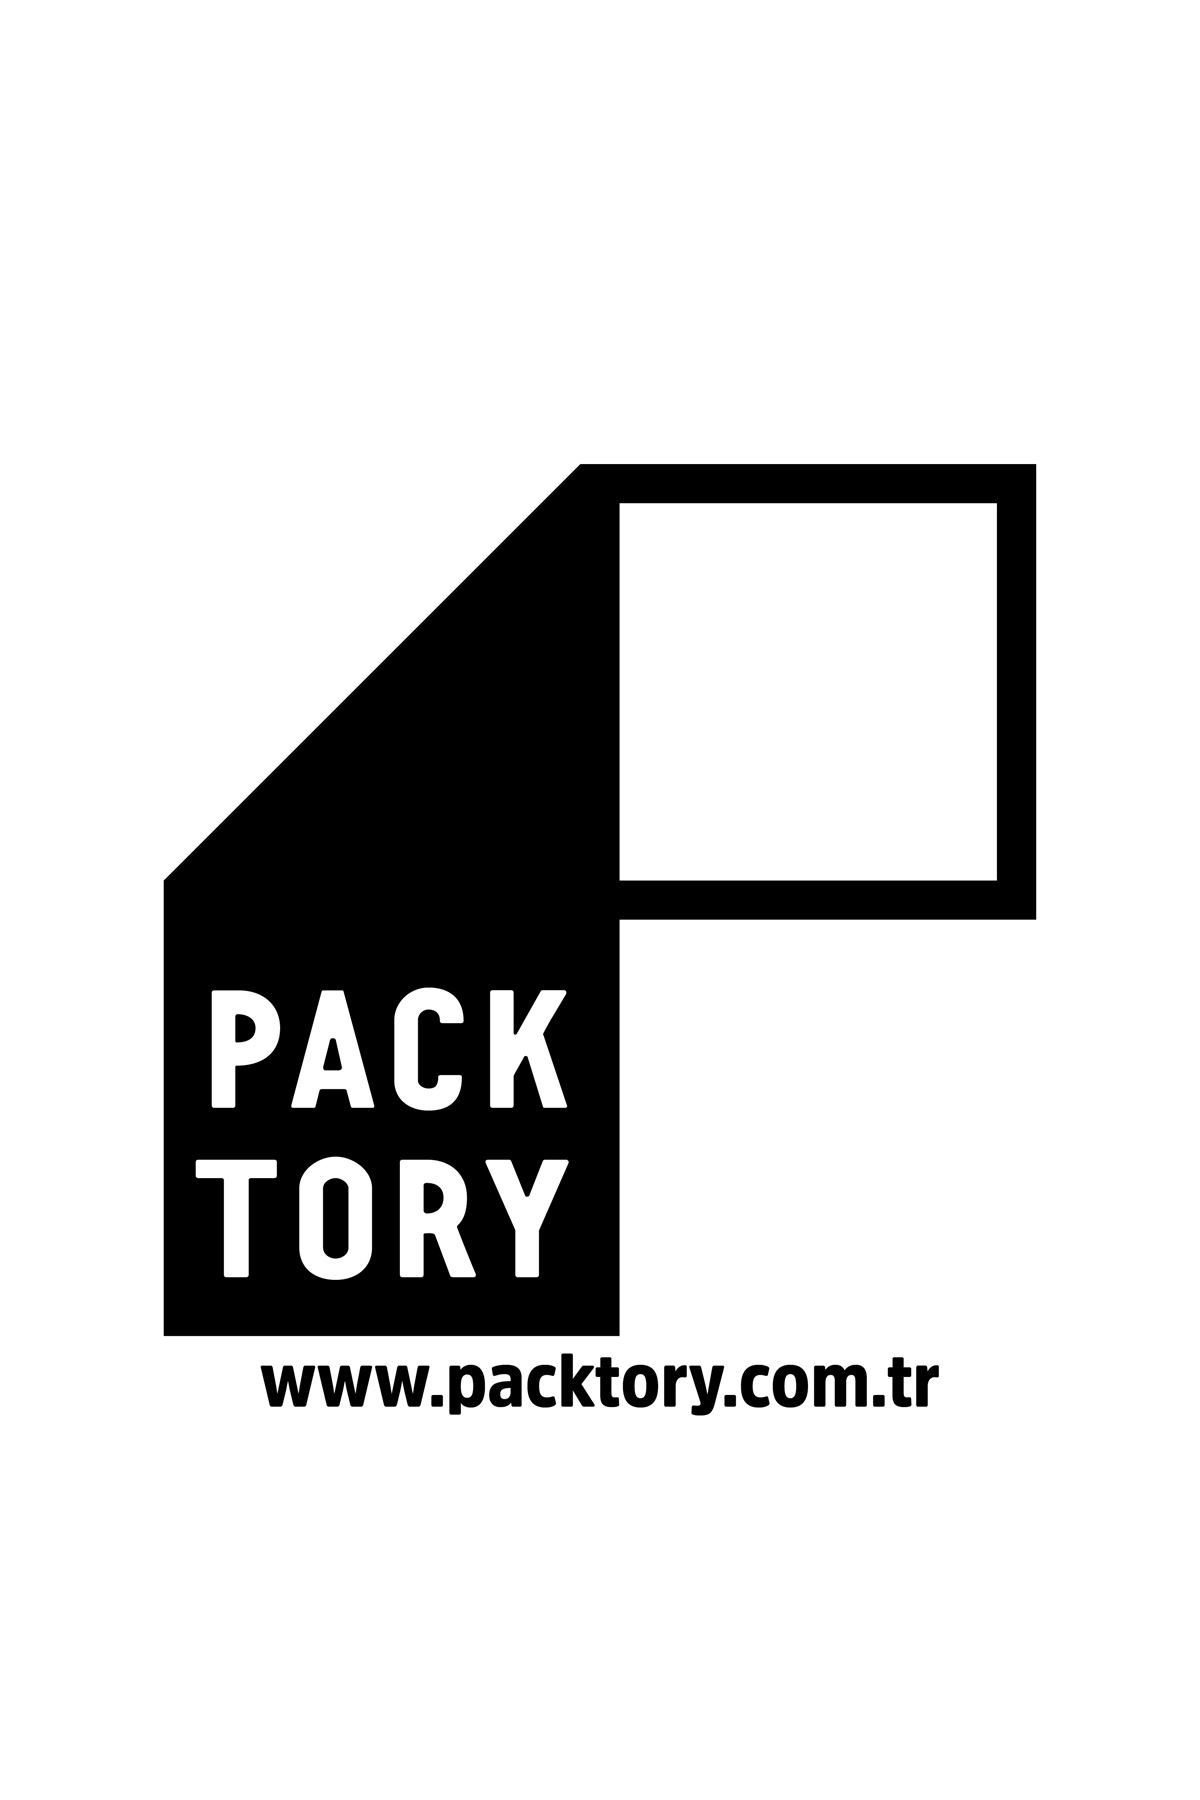 Packtory 11 x 18,5 + 3,5 Cm Aluminyum Kilitli Doypack Ambalaj 100 Gr. 250 Adet